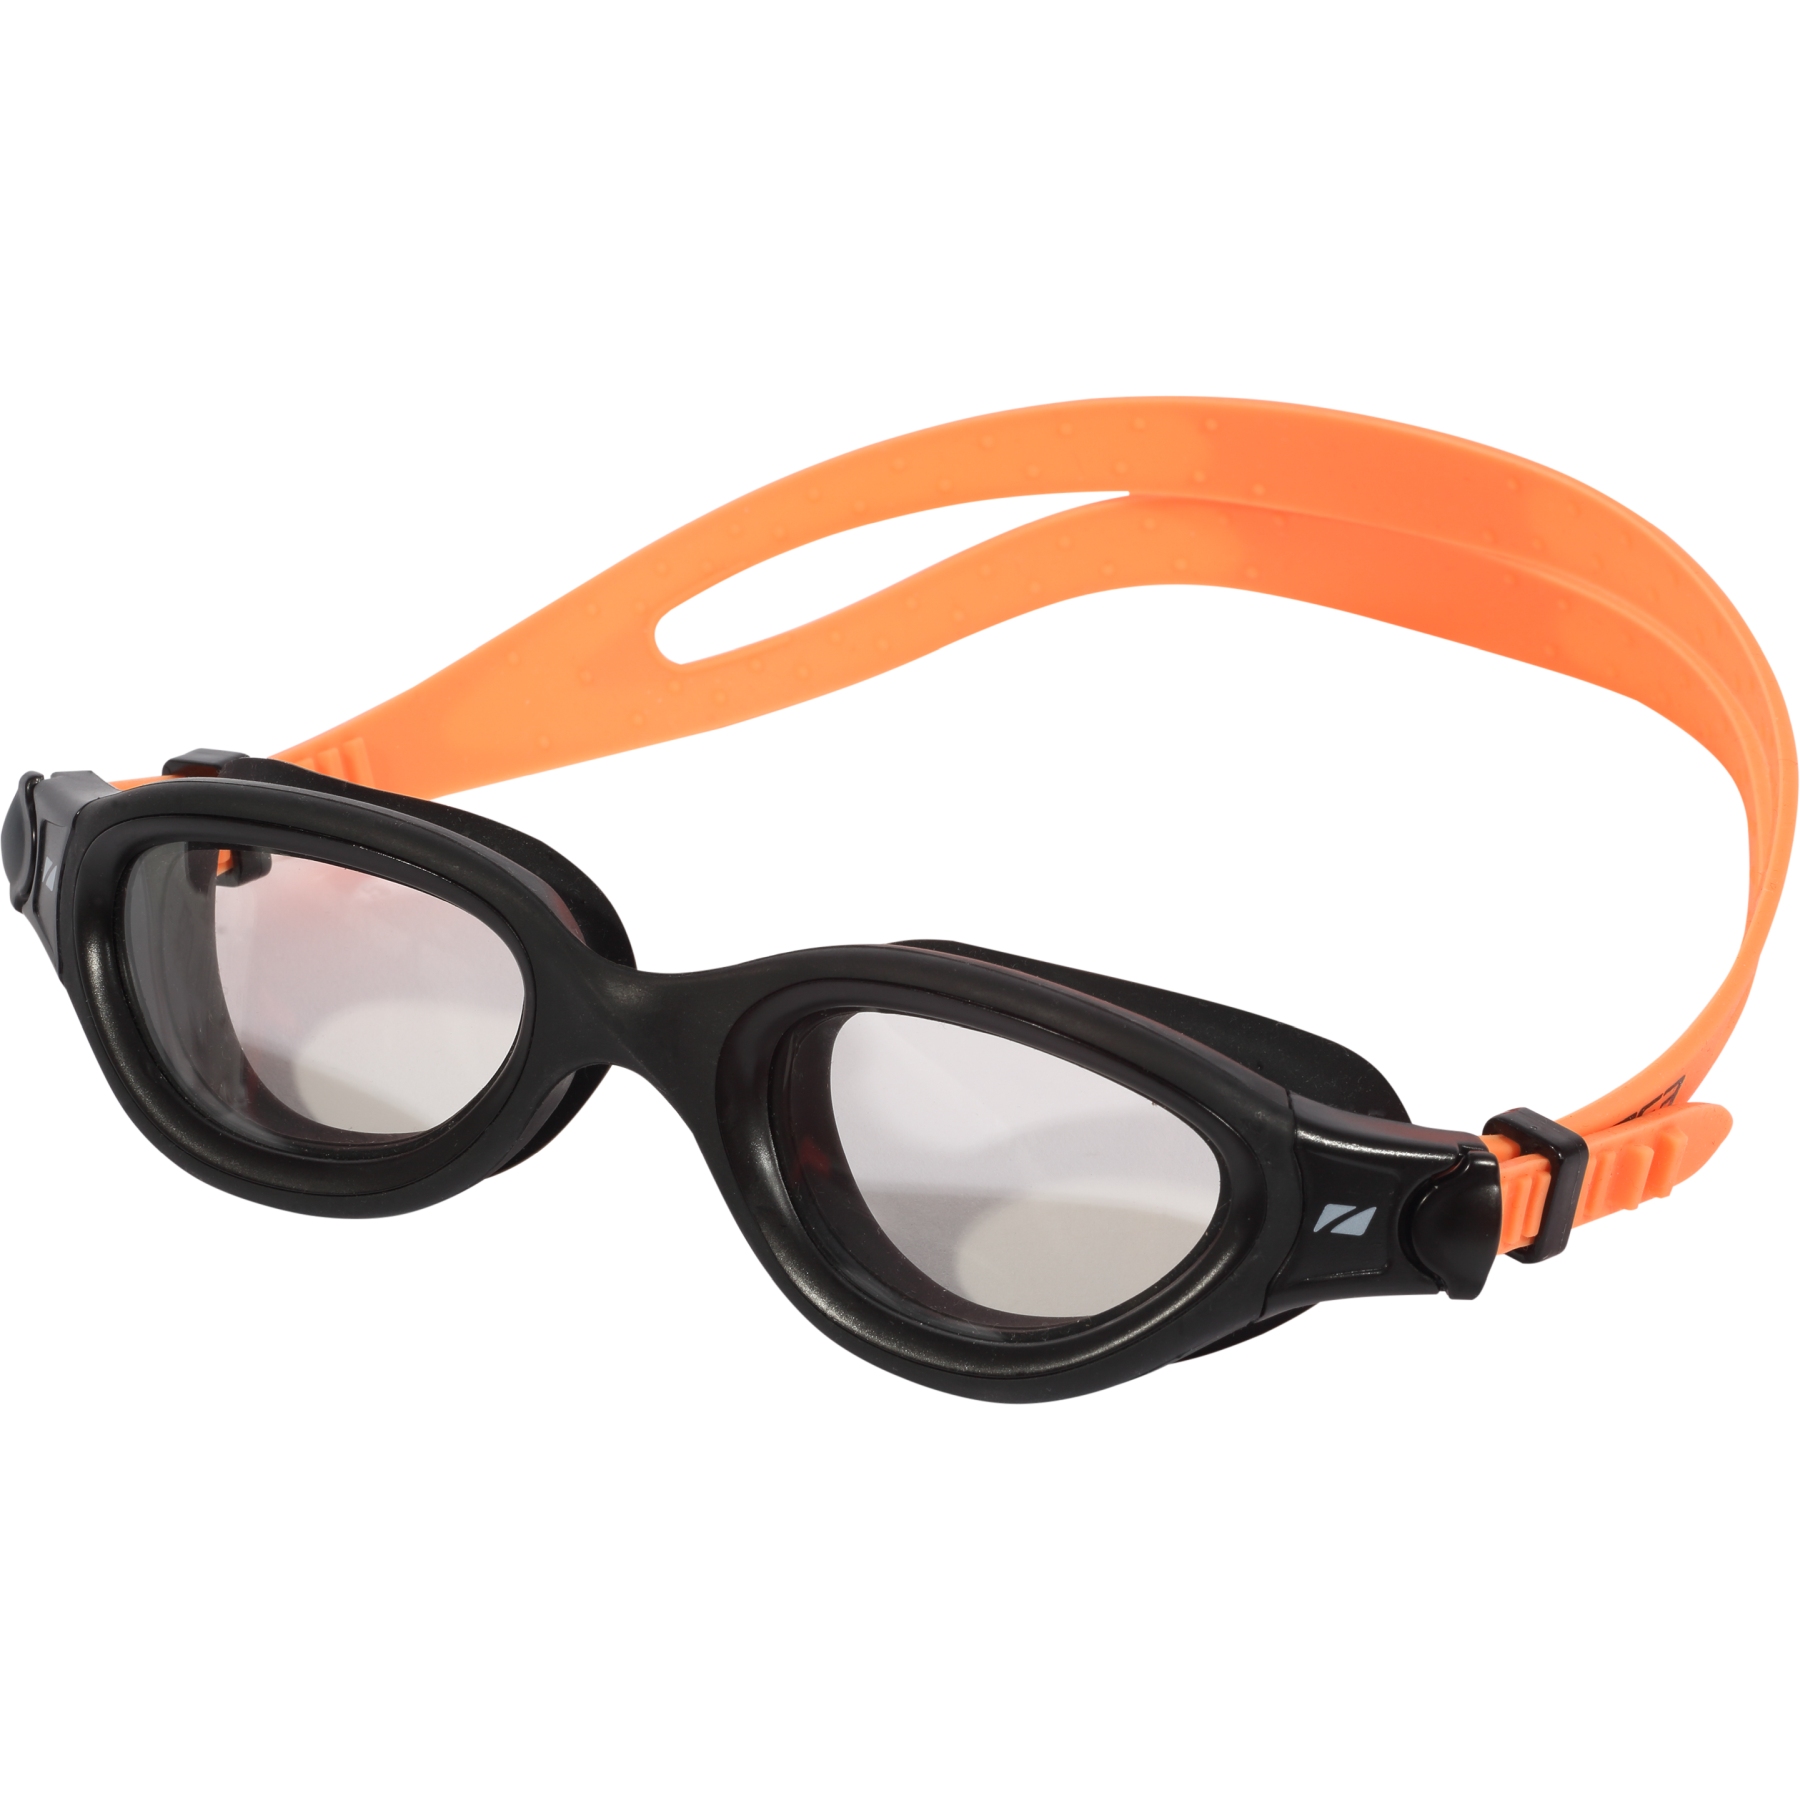 Picture of Zone3 Venator-X Swim Goggles - Photochromatic - orange/black - photochromatic lens